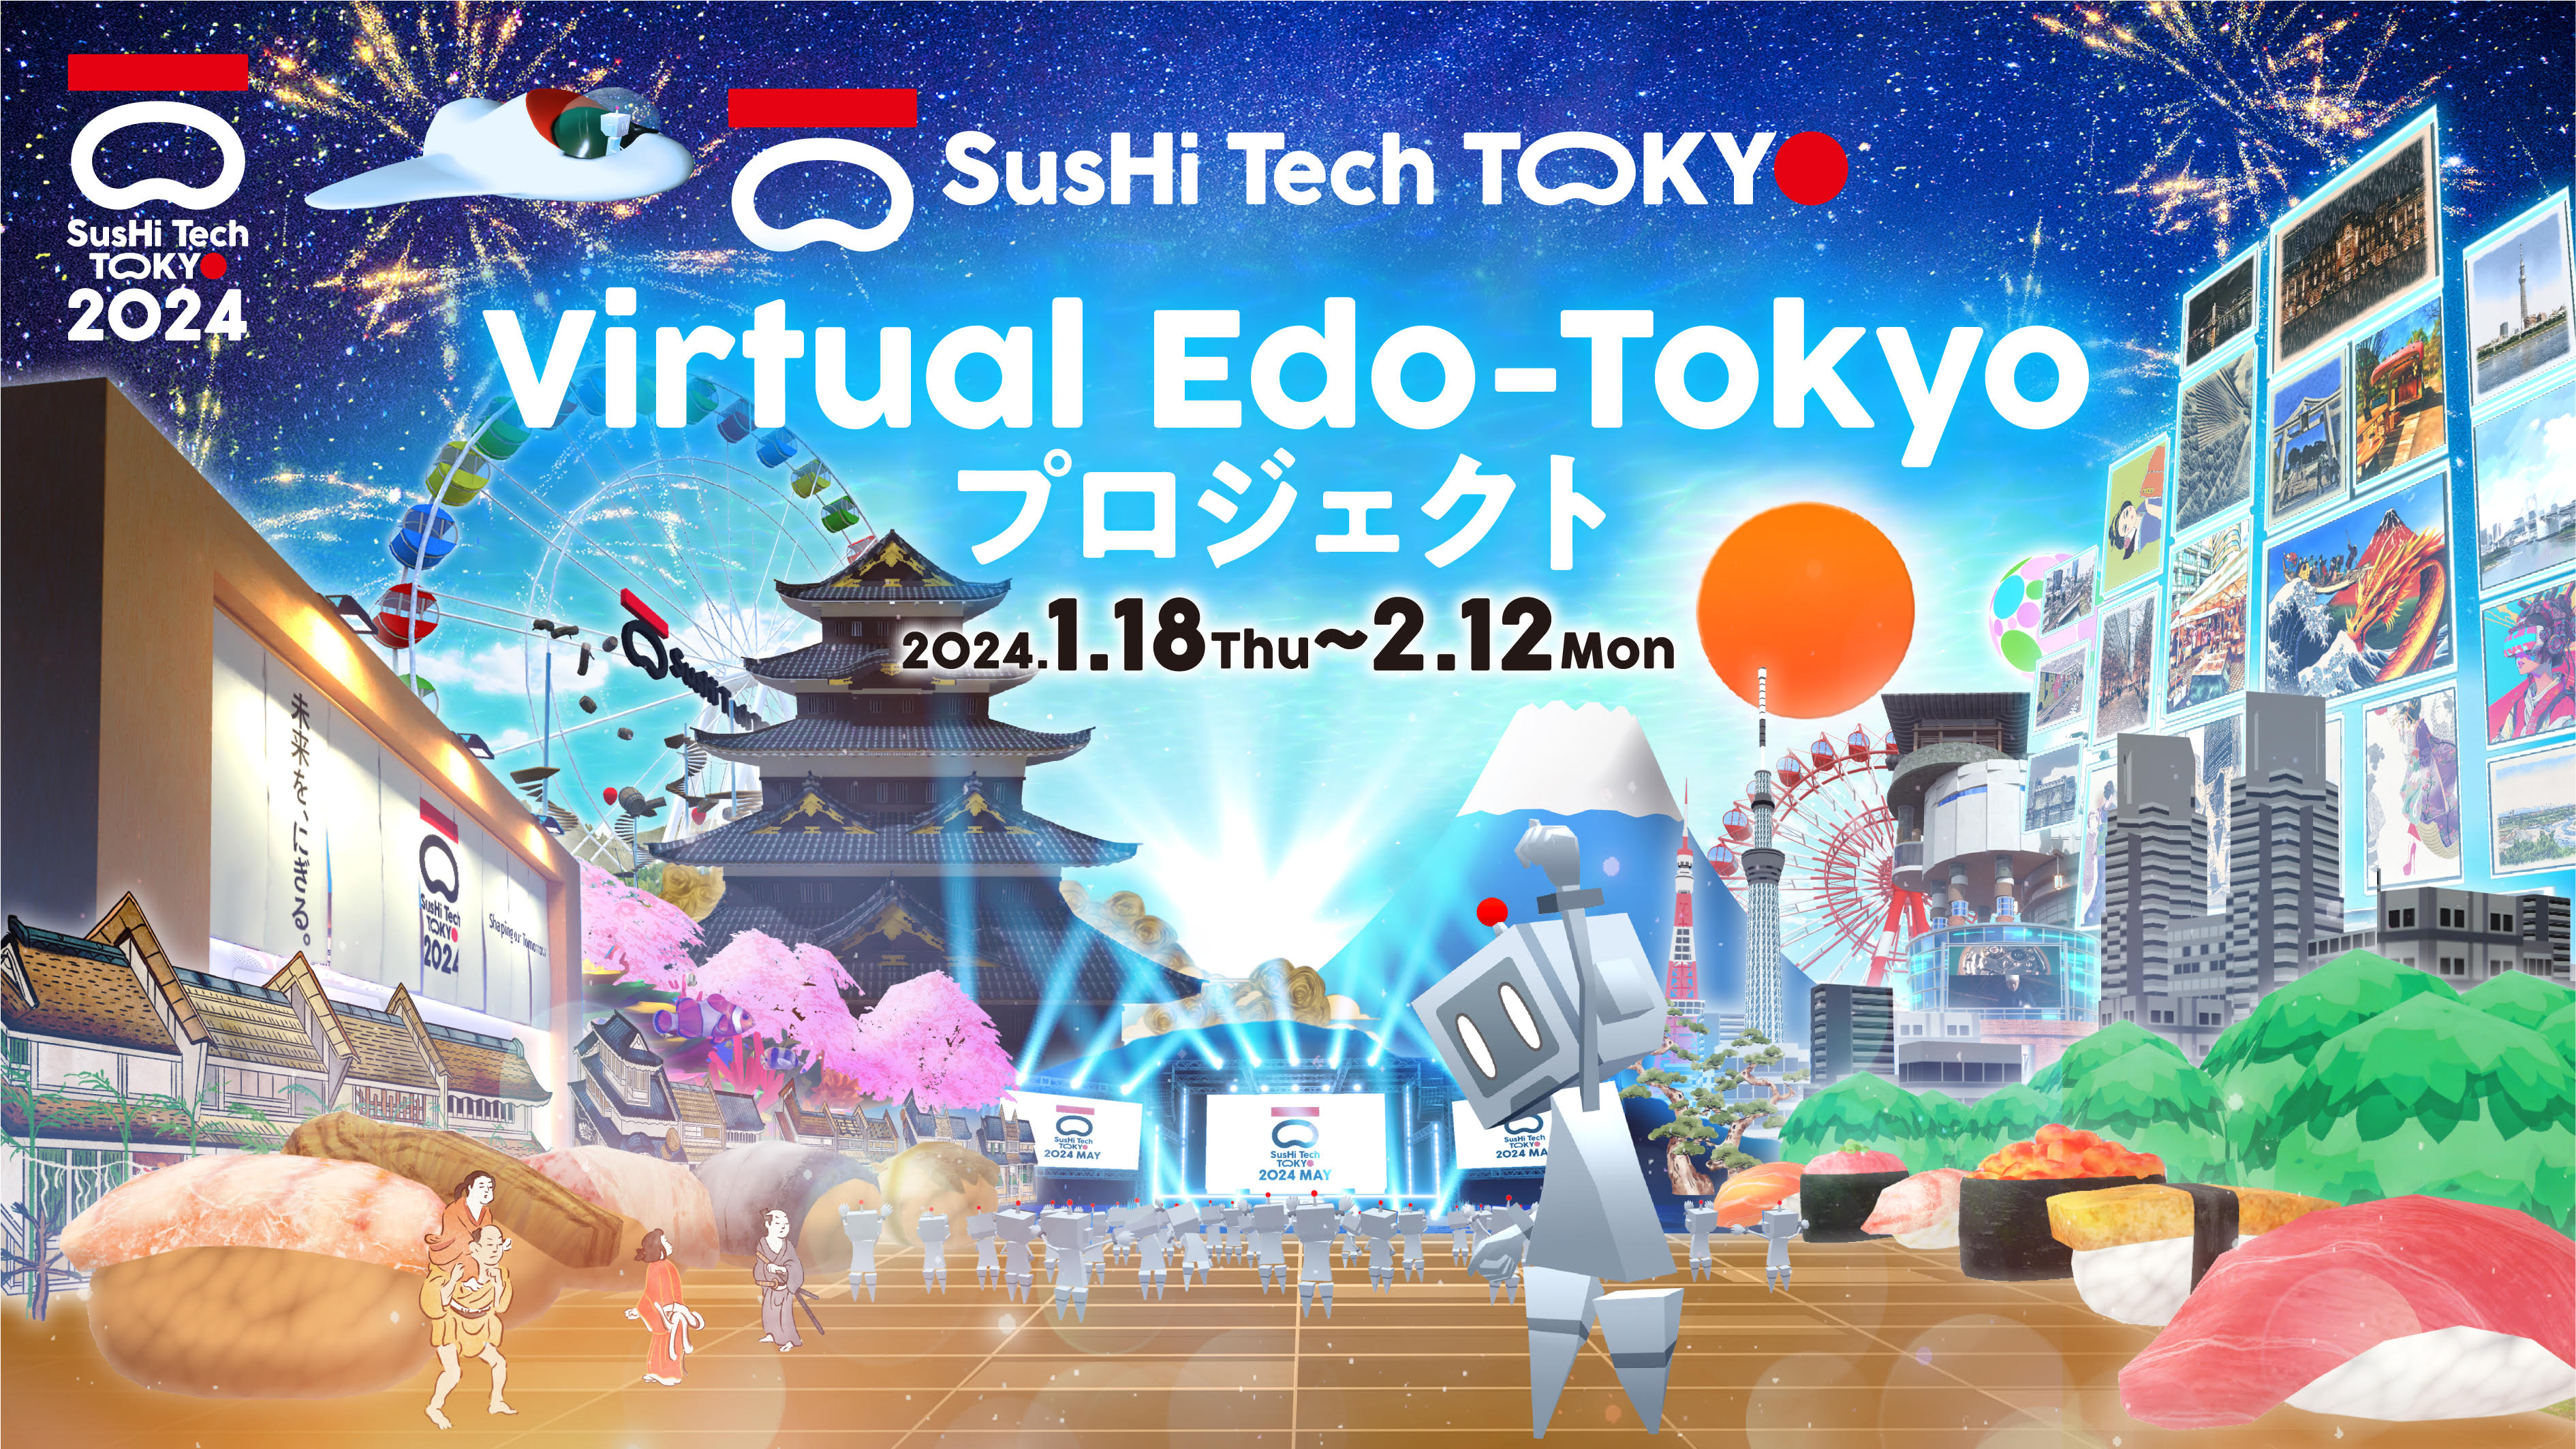 Virtual Edo-Tokyo